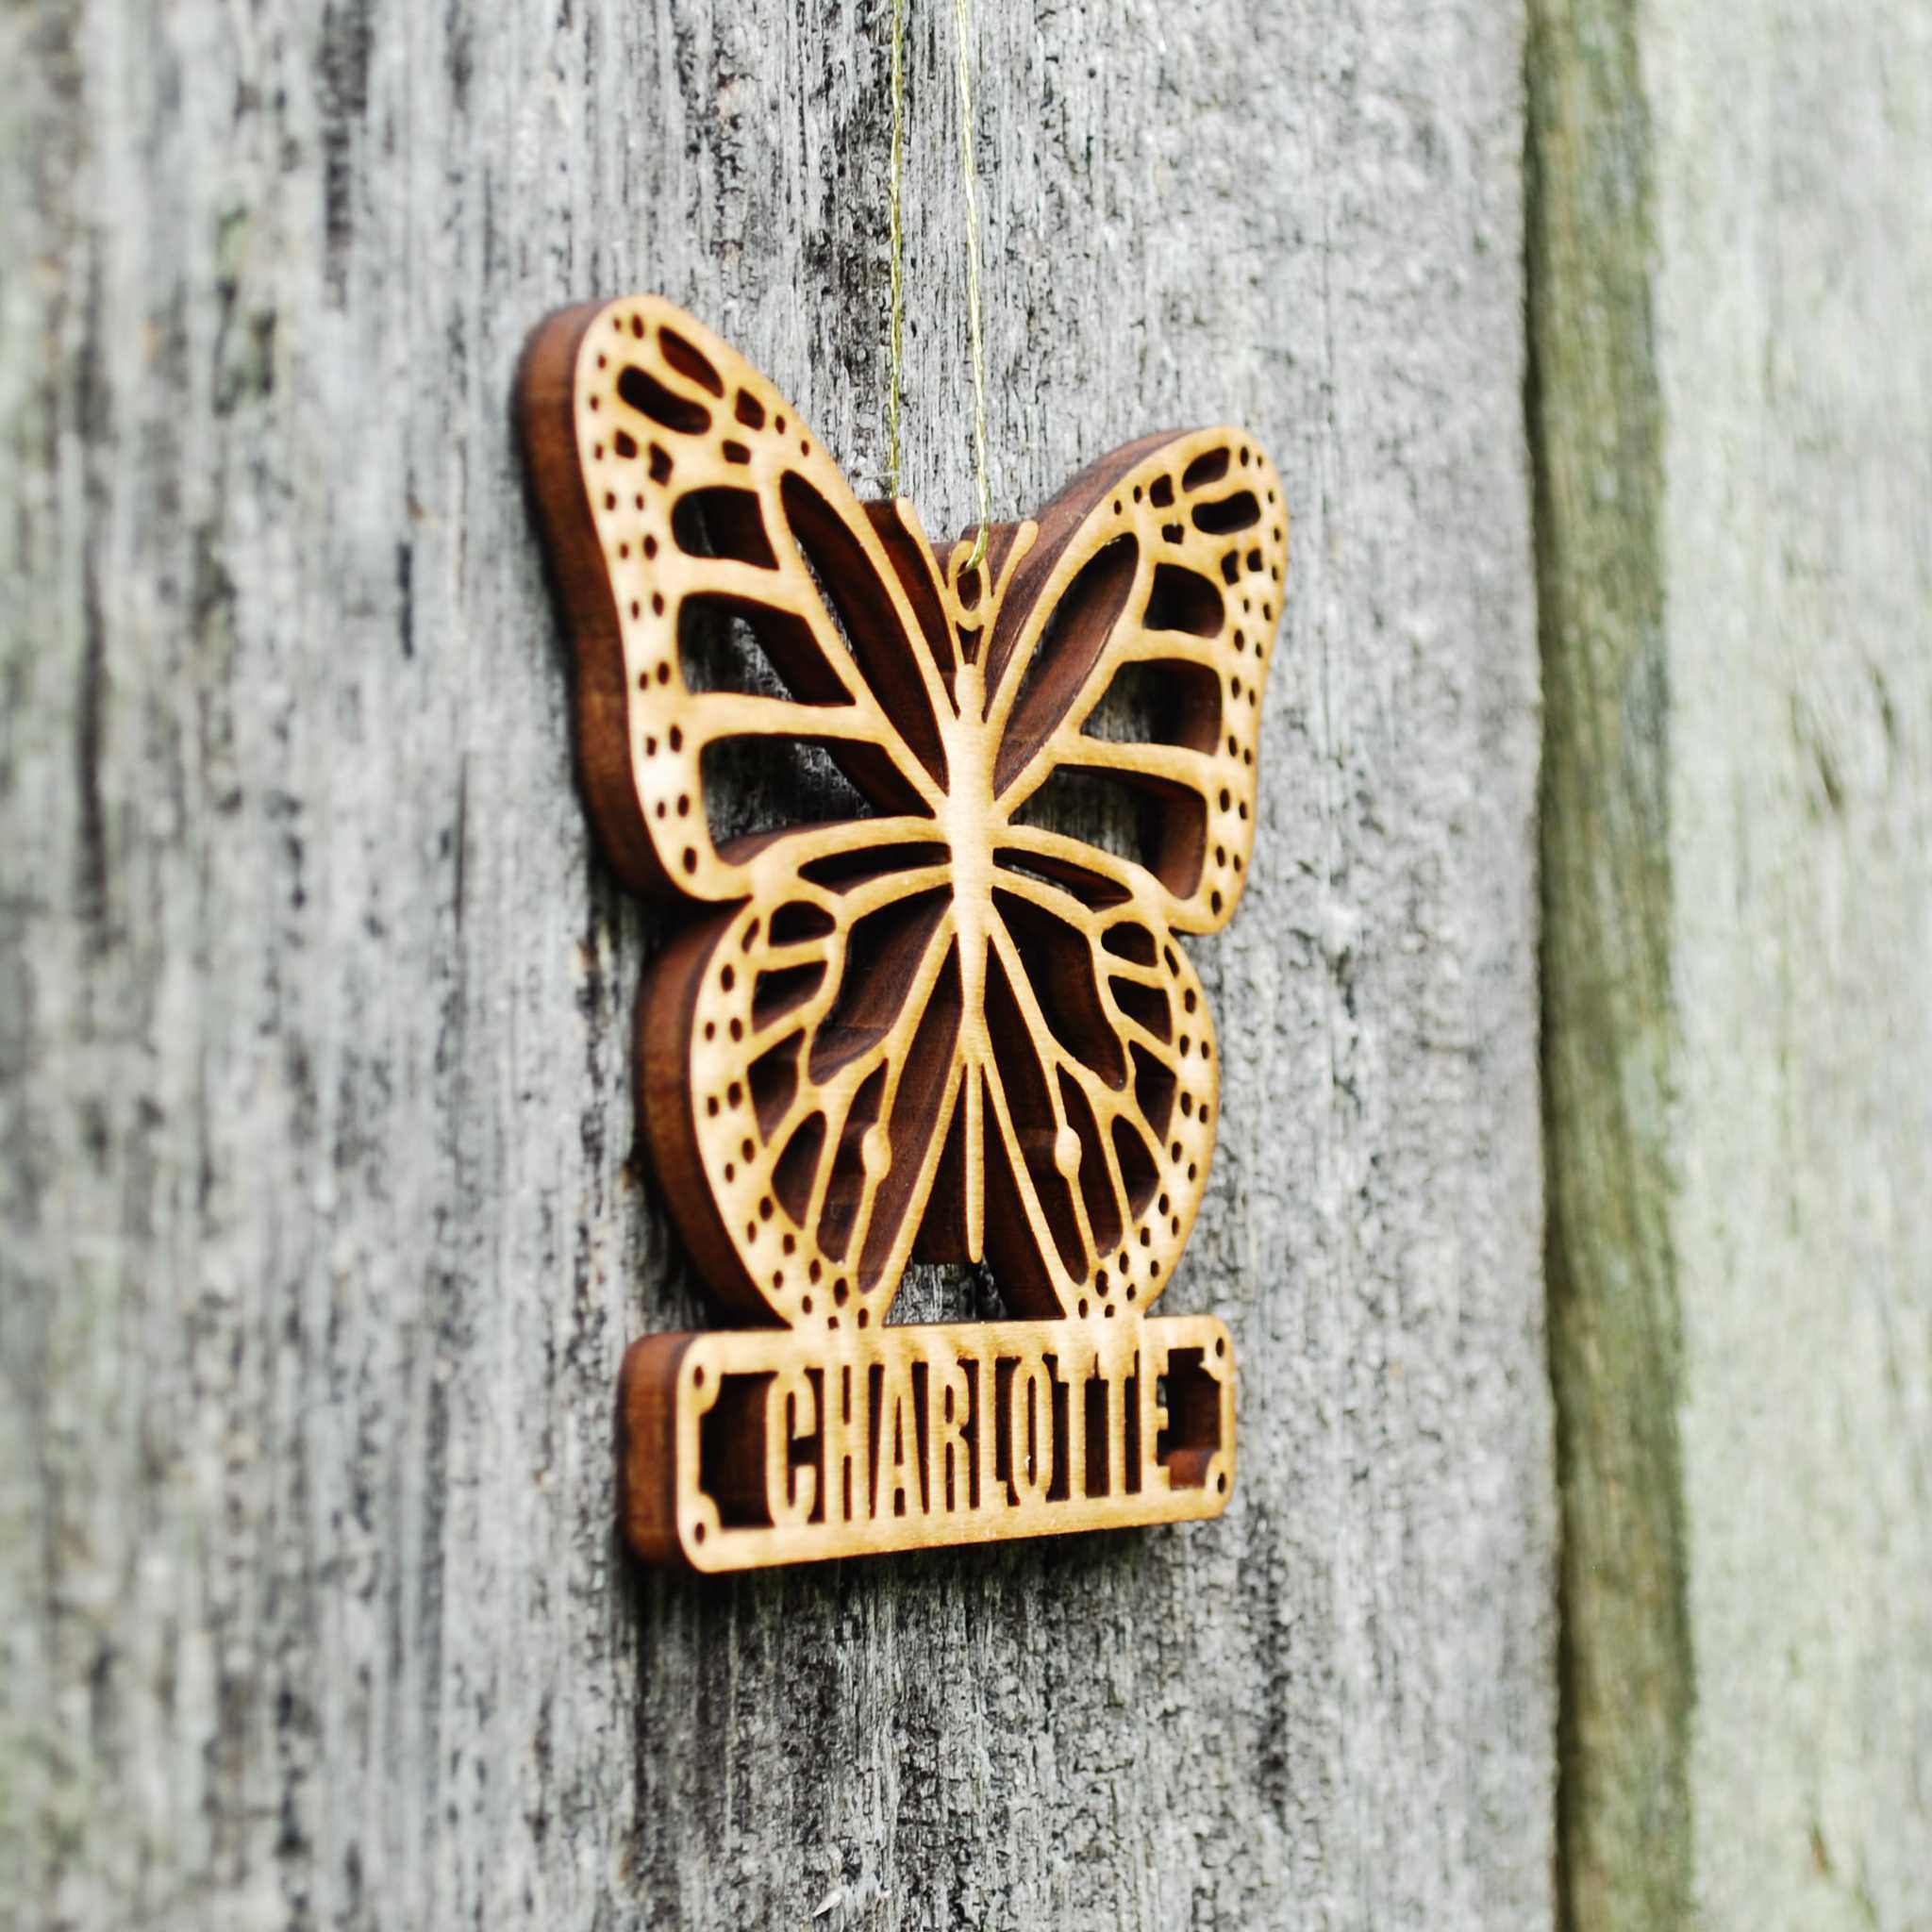 Monarch Butterfly Ornament